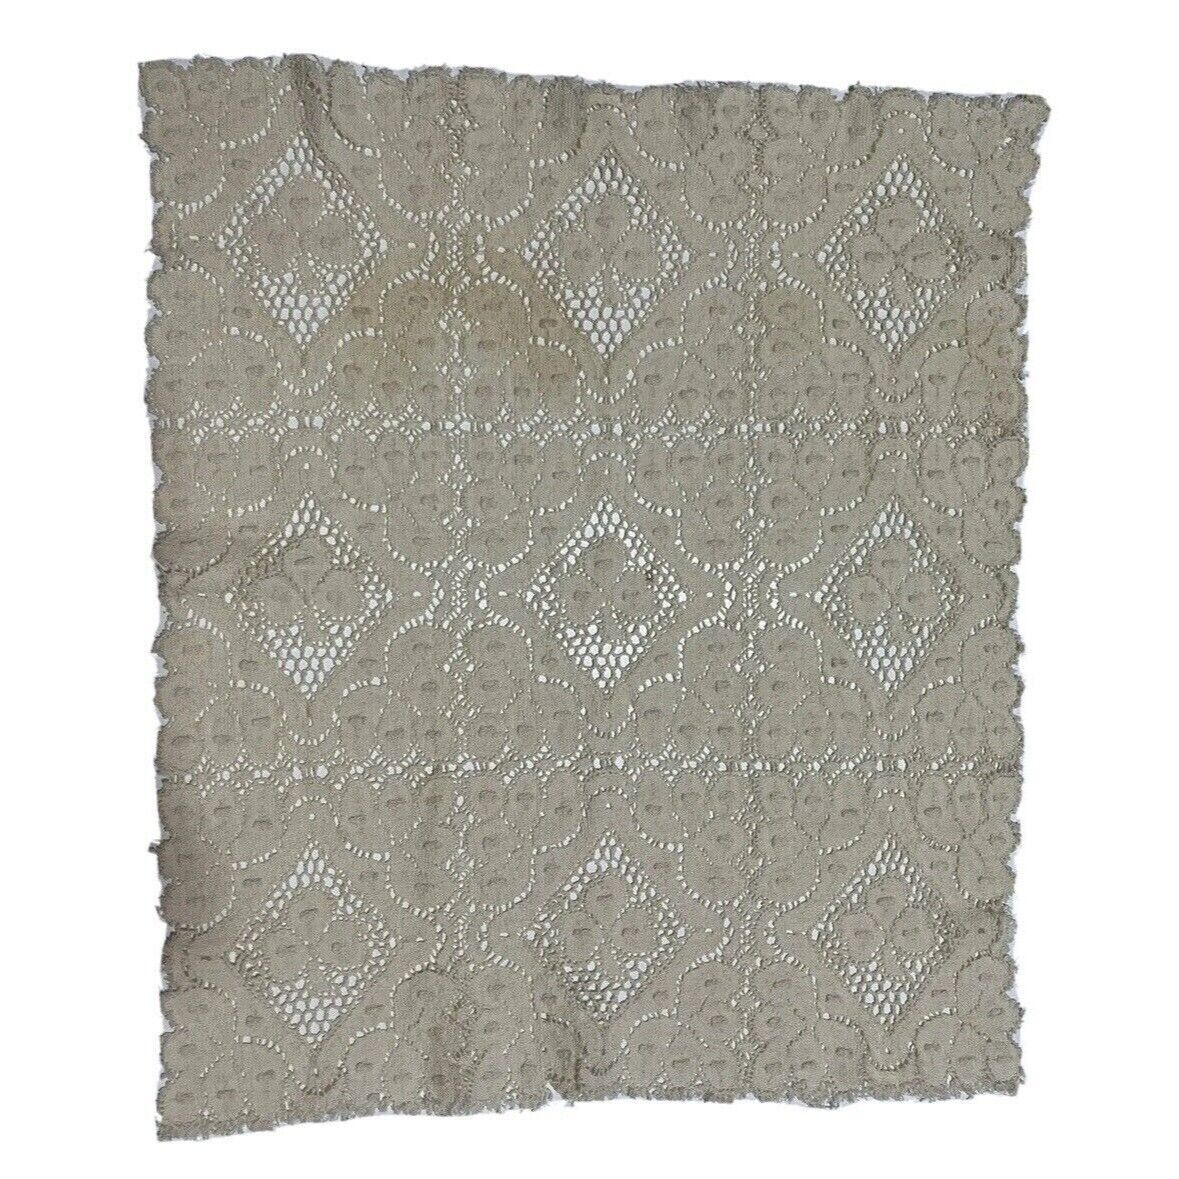 Vtg Hand Crochet Lace Table Placemat Dresser Rectangle Floral Doily Remnant 14x9